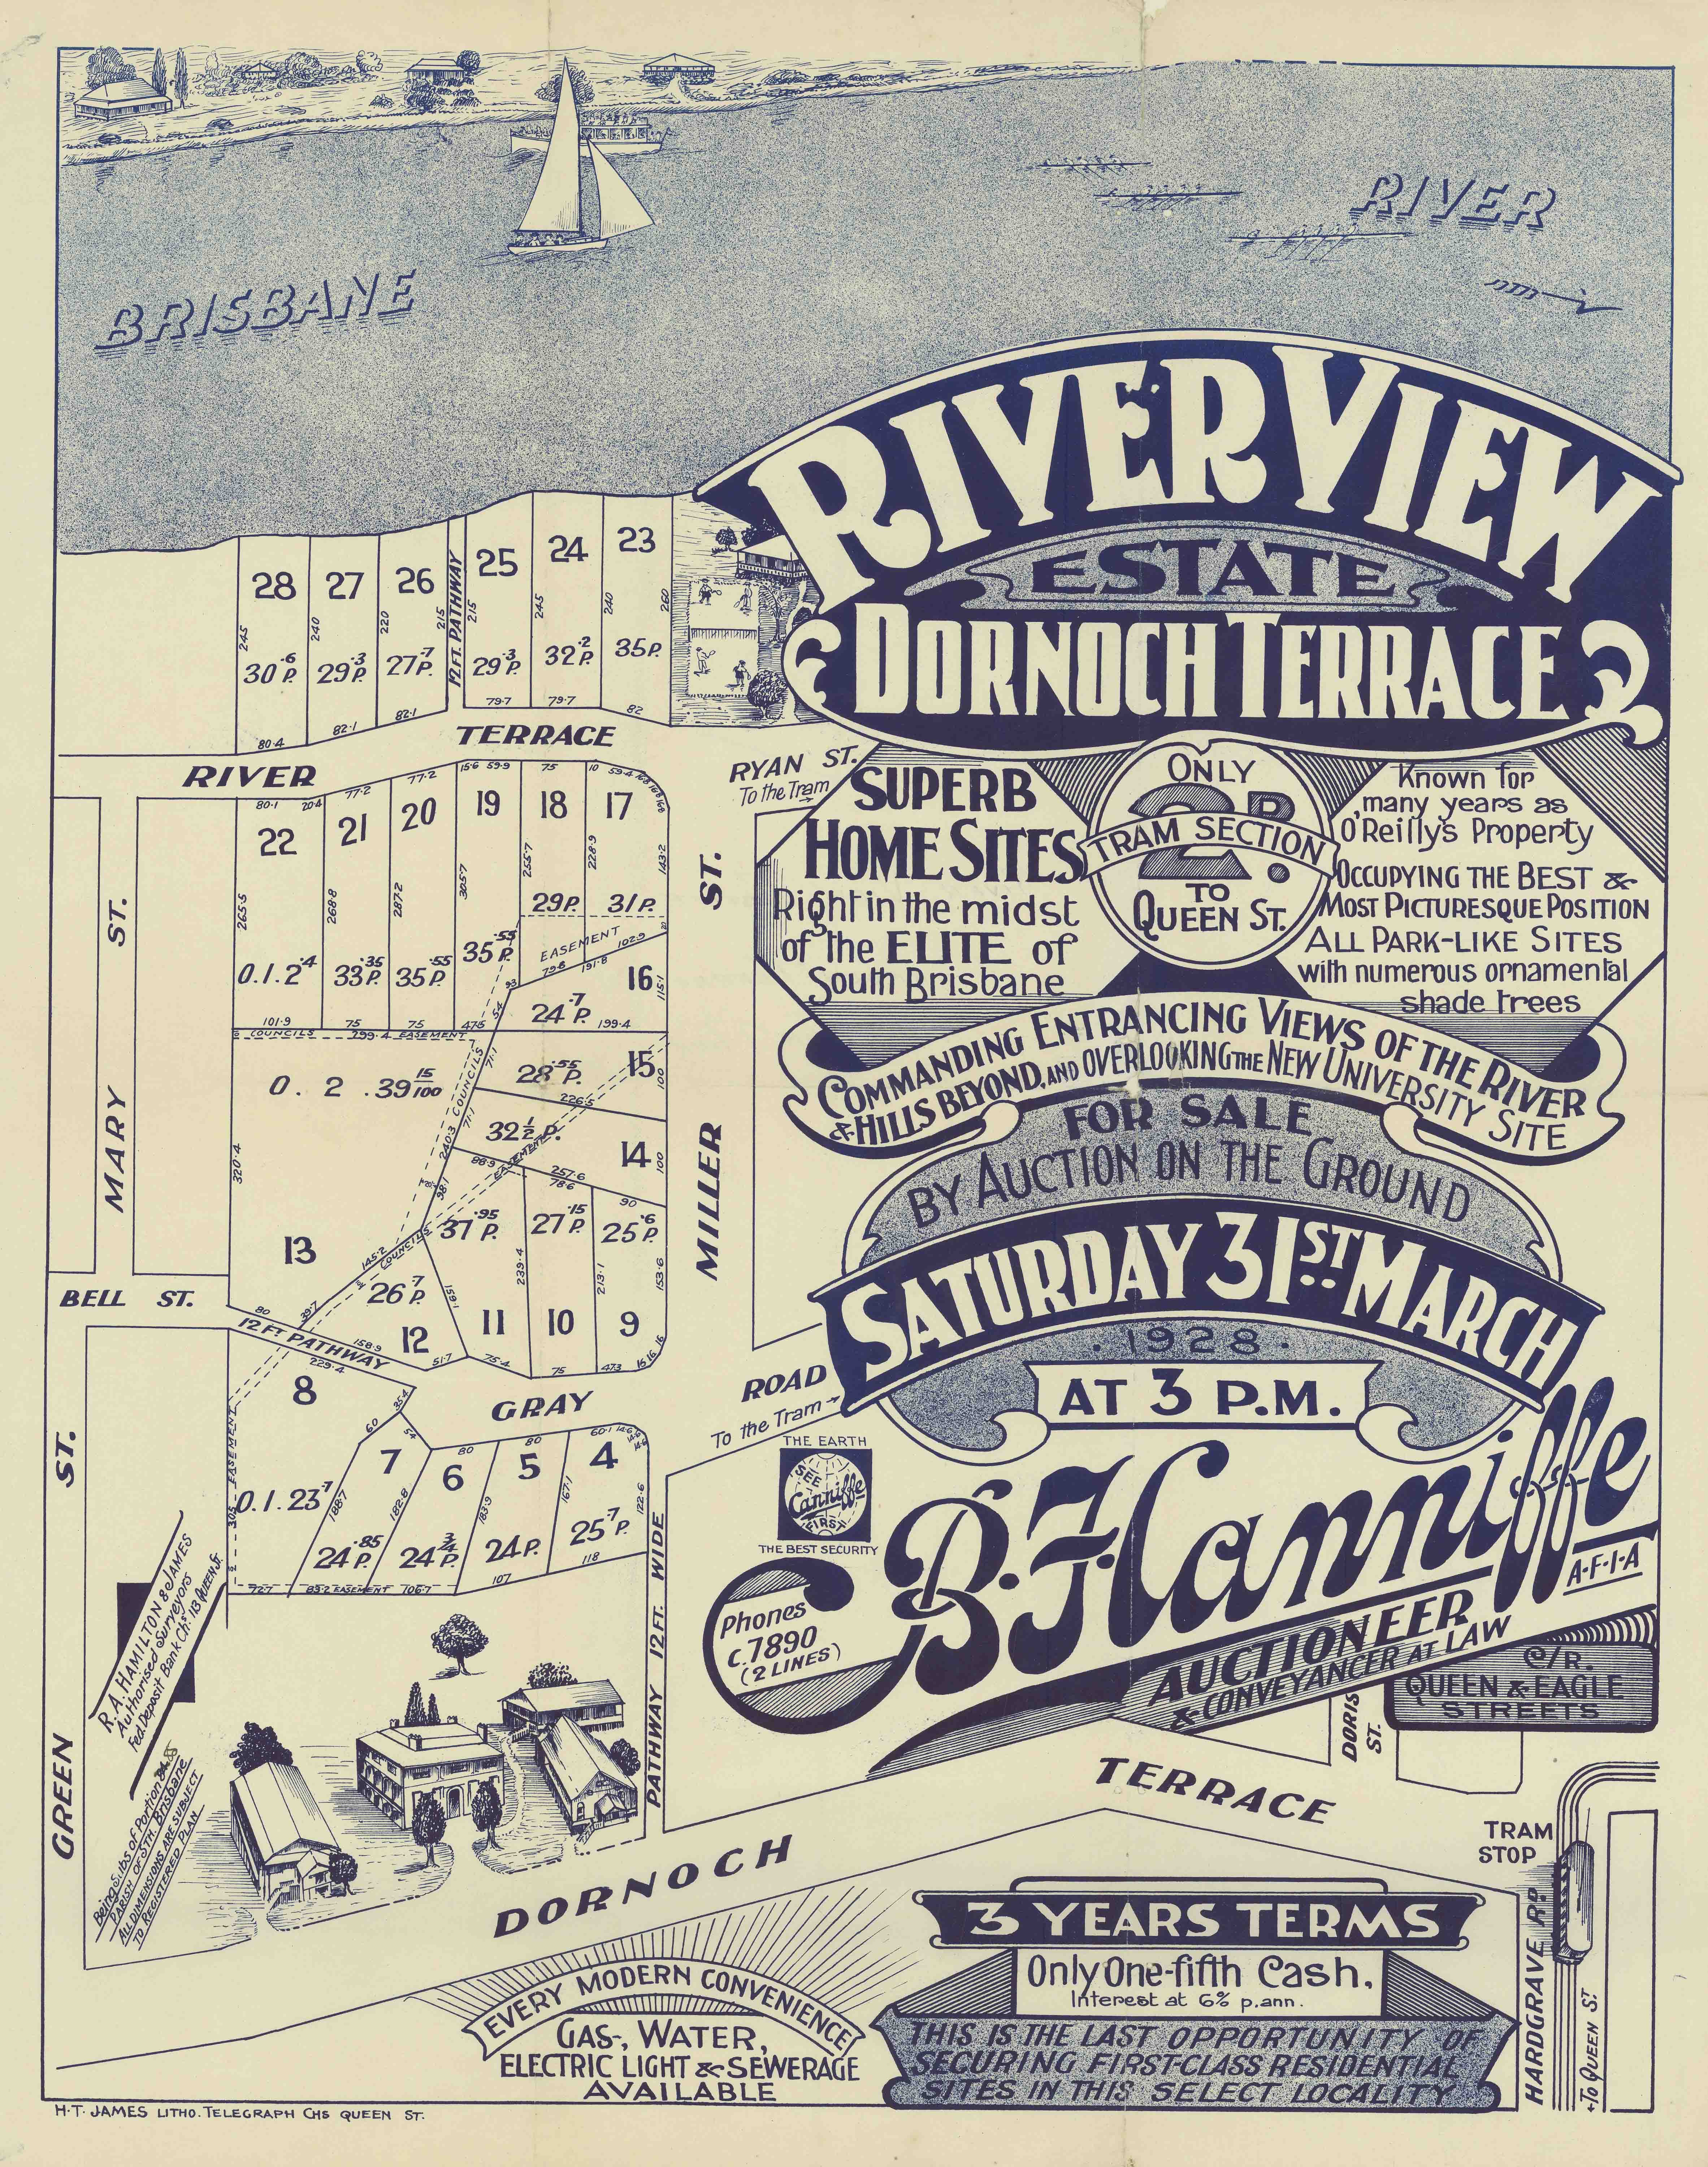 Riverview estate Toonarbin dornoch terrace land sale 1928